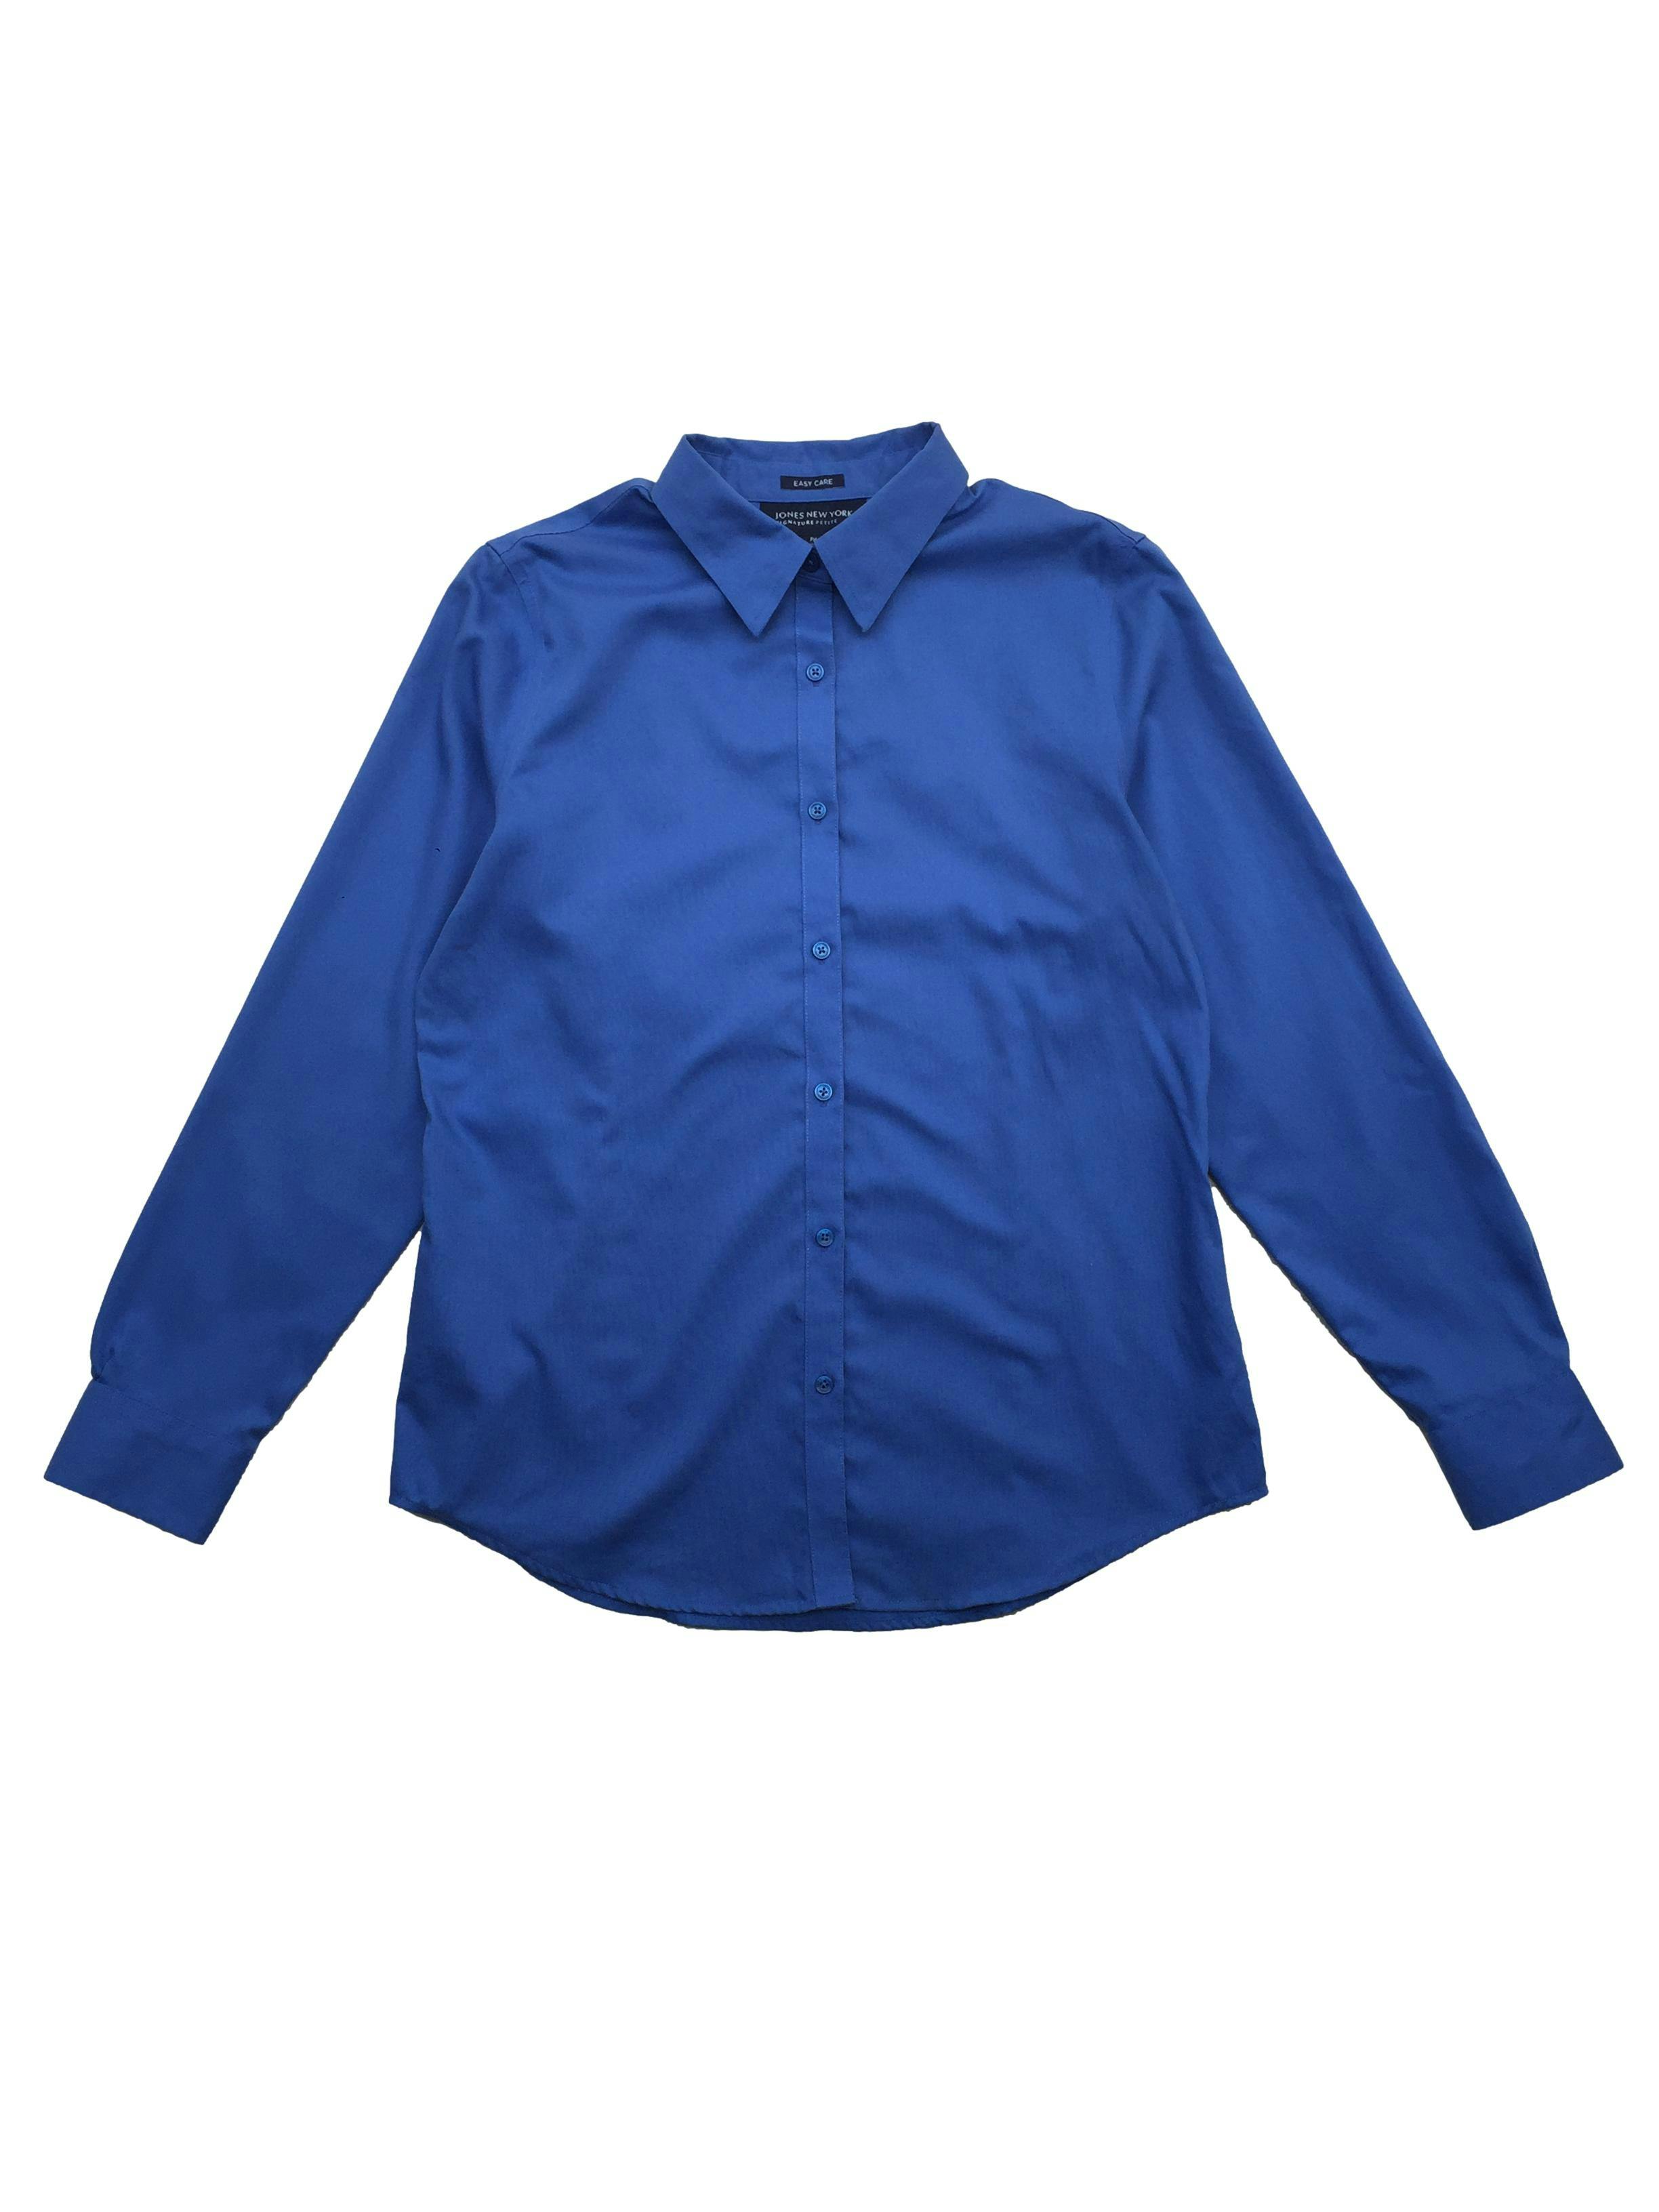 Camisa azulina Jones New York 100% algodón, con pinzas, easy care. Busto 100cm Largo 64cm